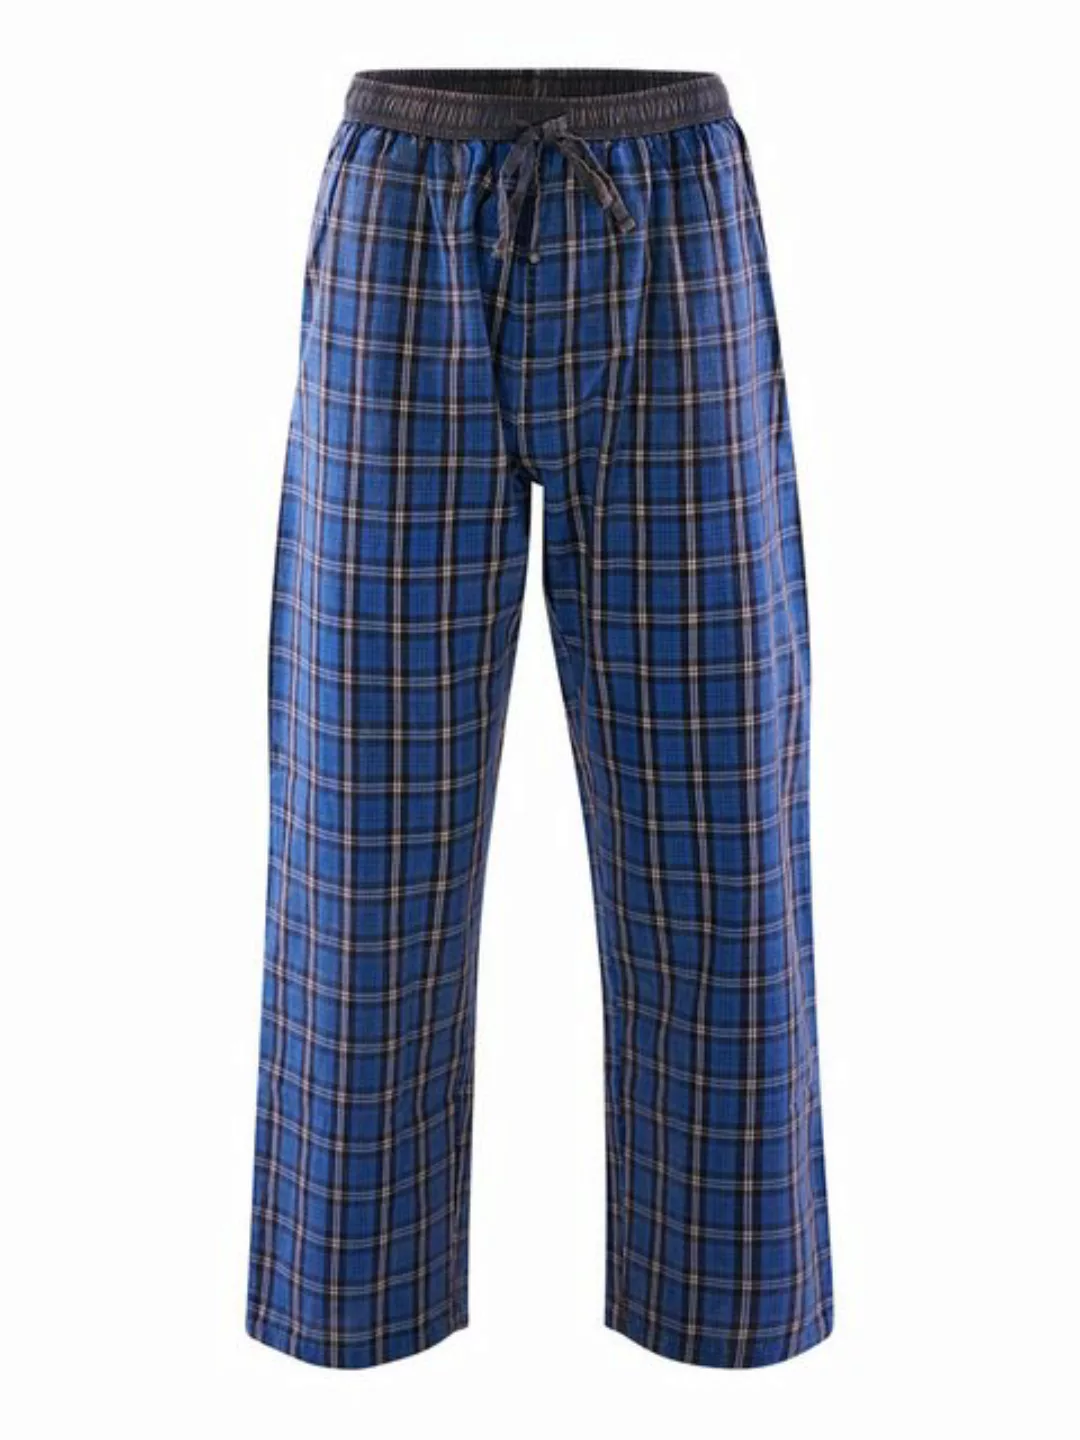 Luca David Pyjamahose Olden Glory Pants schlaf-hose pyjama schlafmode günstig online kaufen